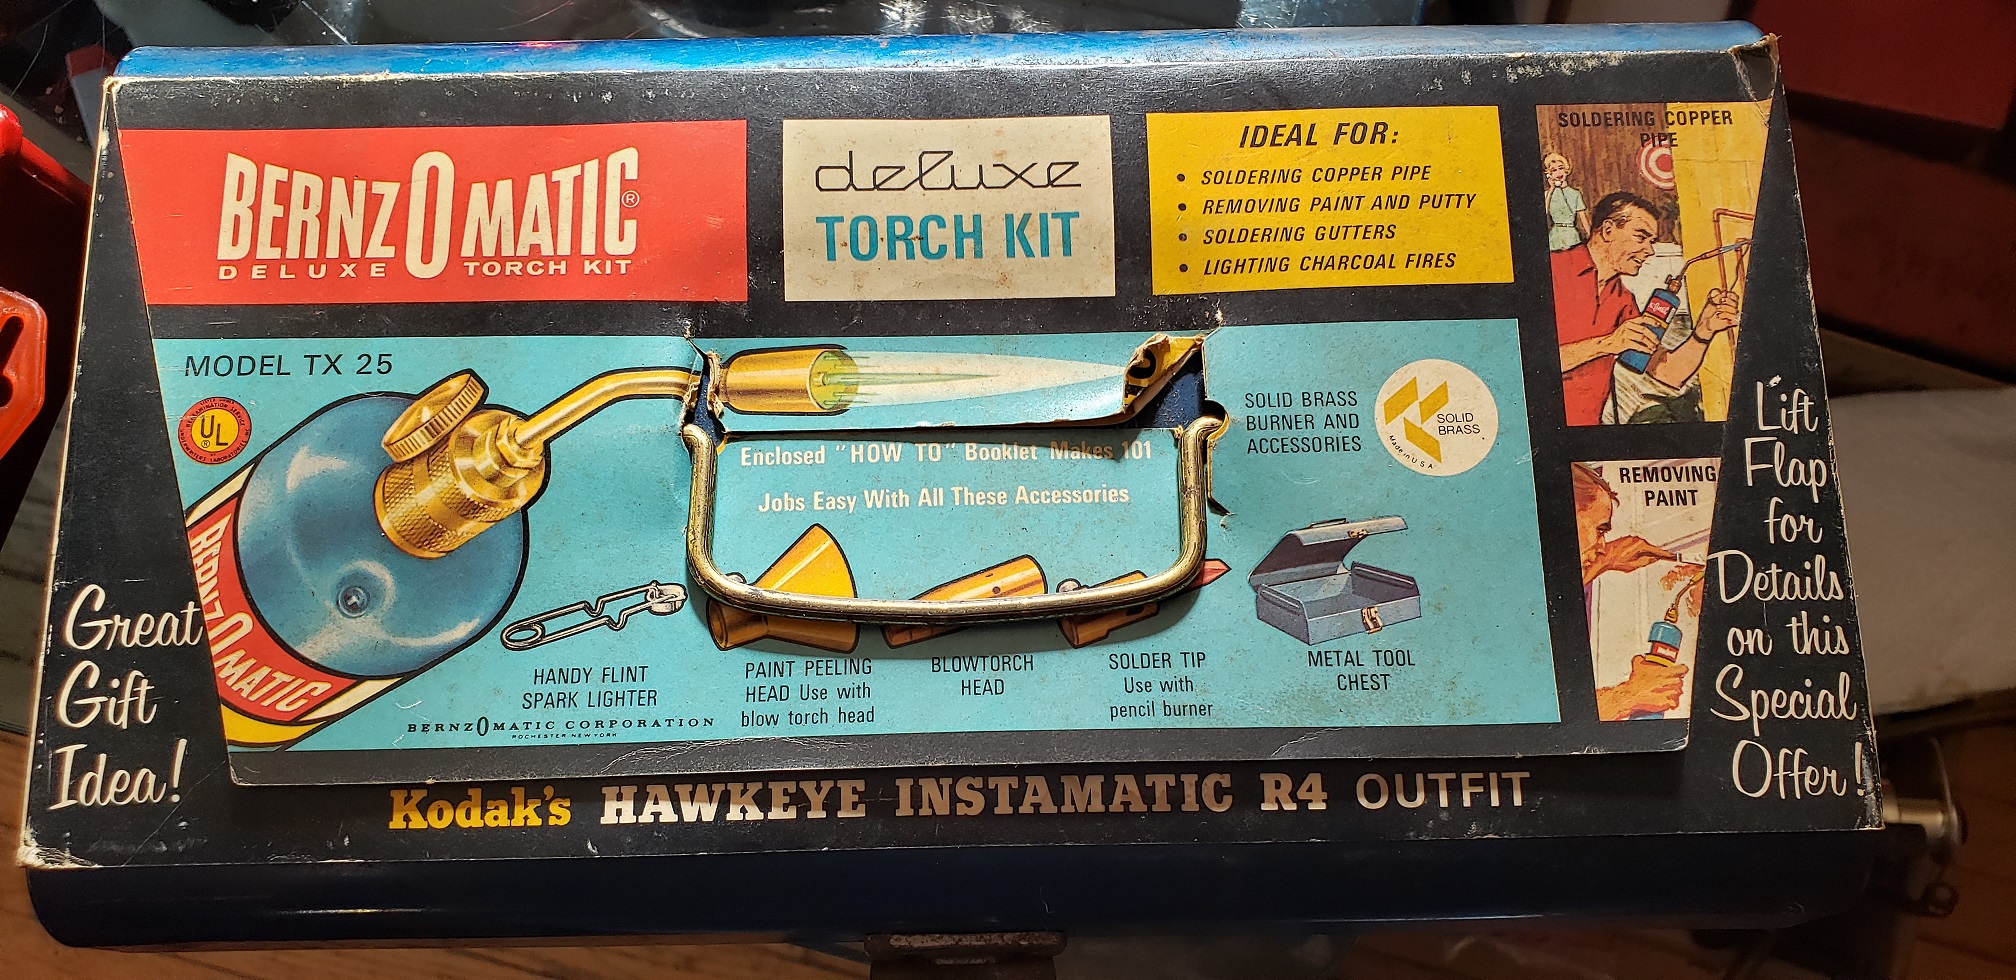 1967 Bernzomatic Torch Kit